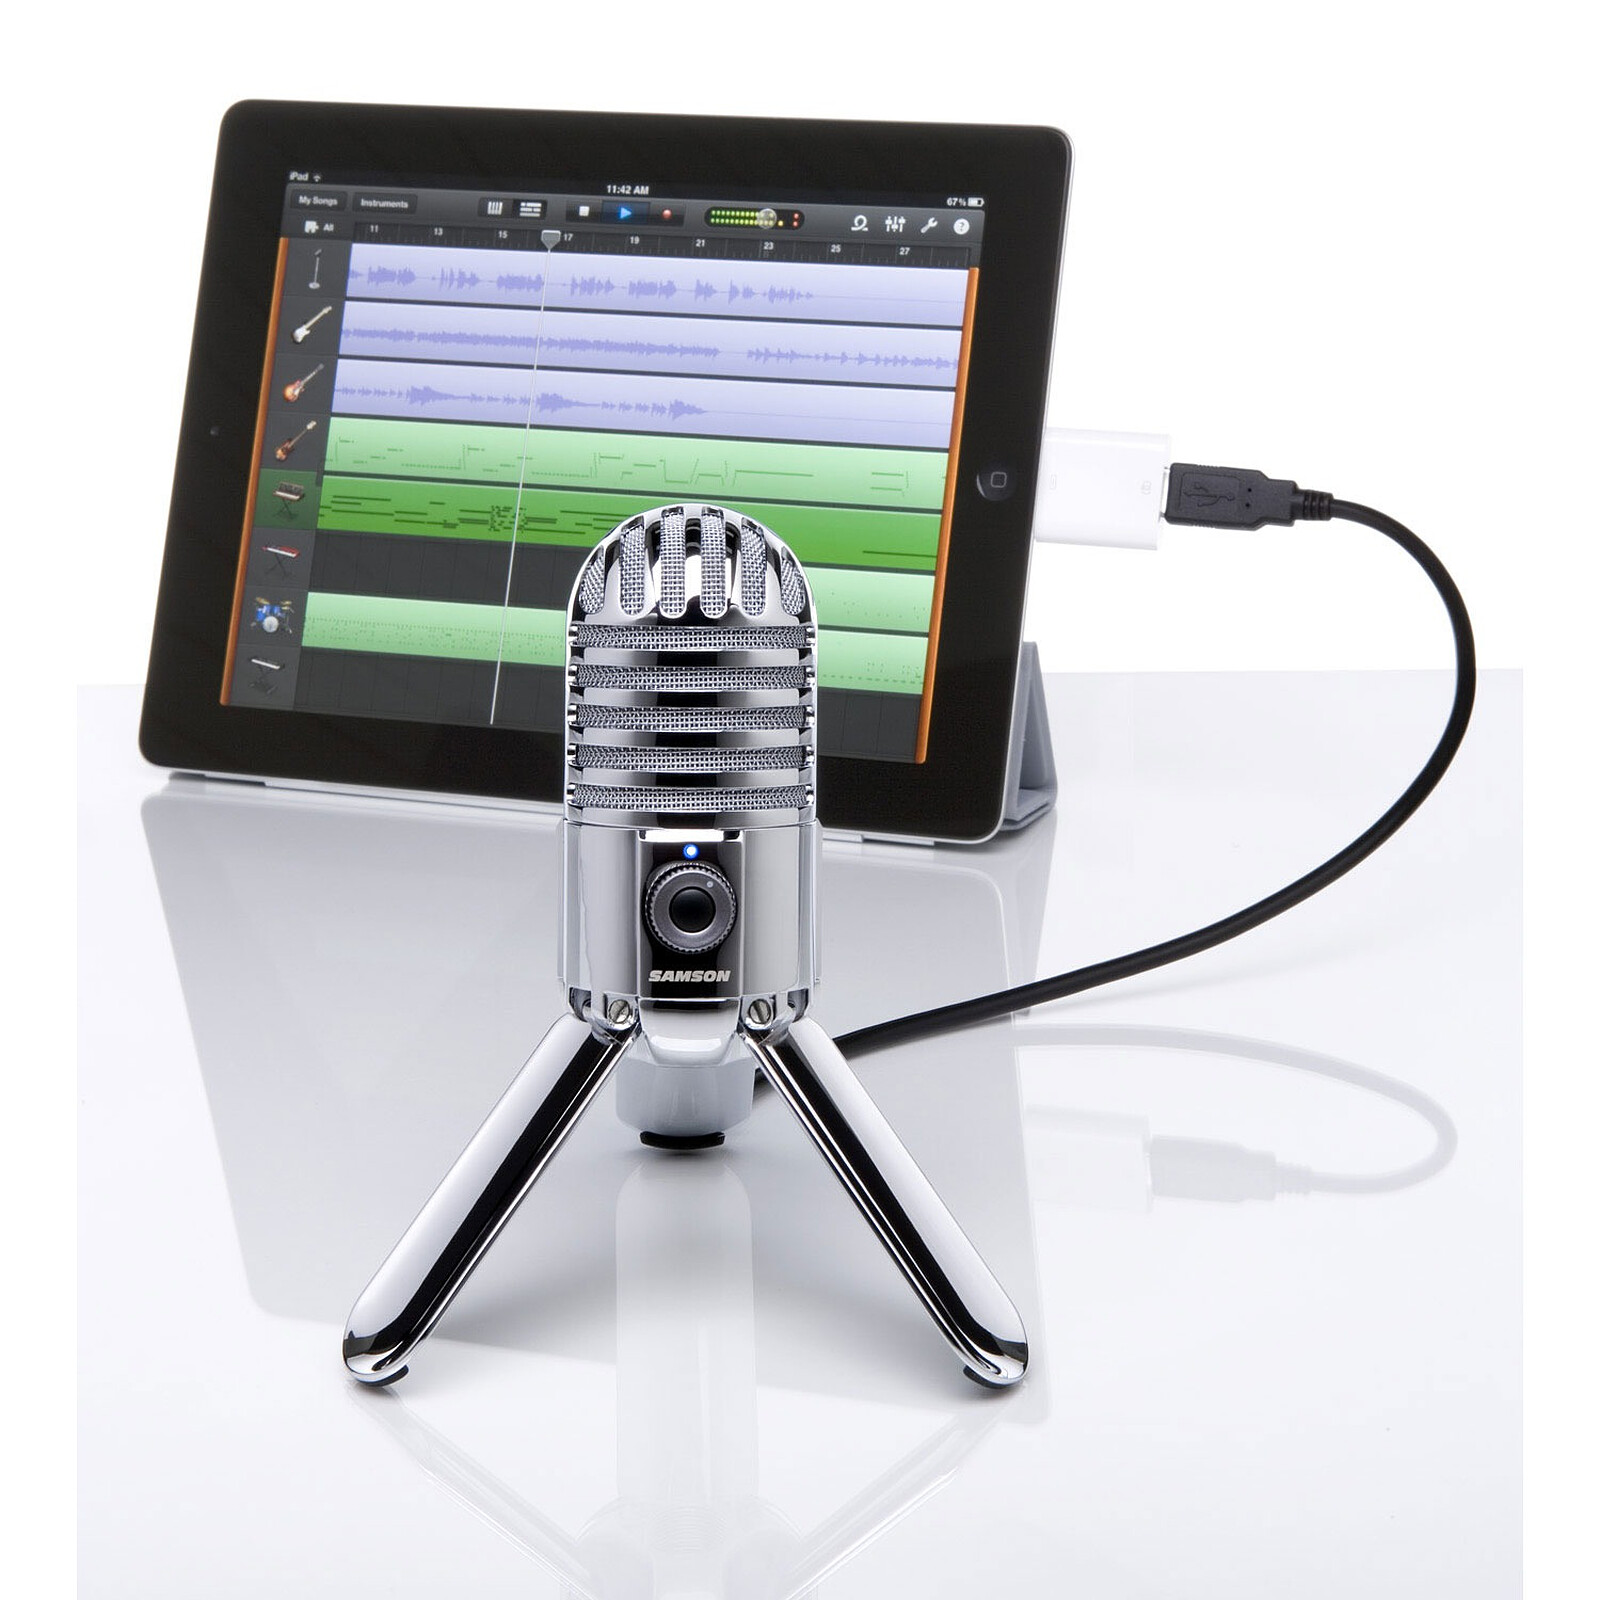 Bird Instruments Singer Pack - Microphone - Garantie 3 ans LDLC